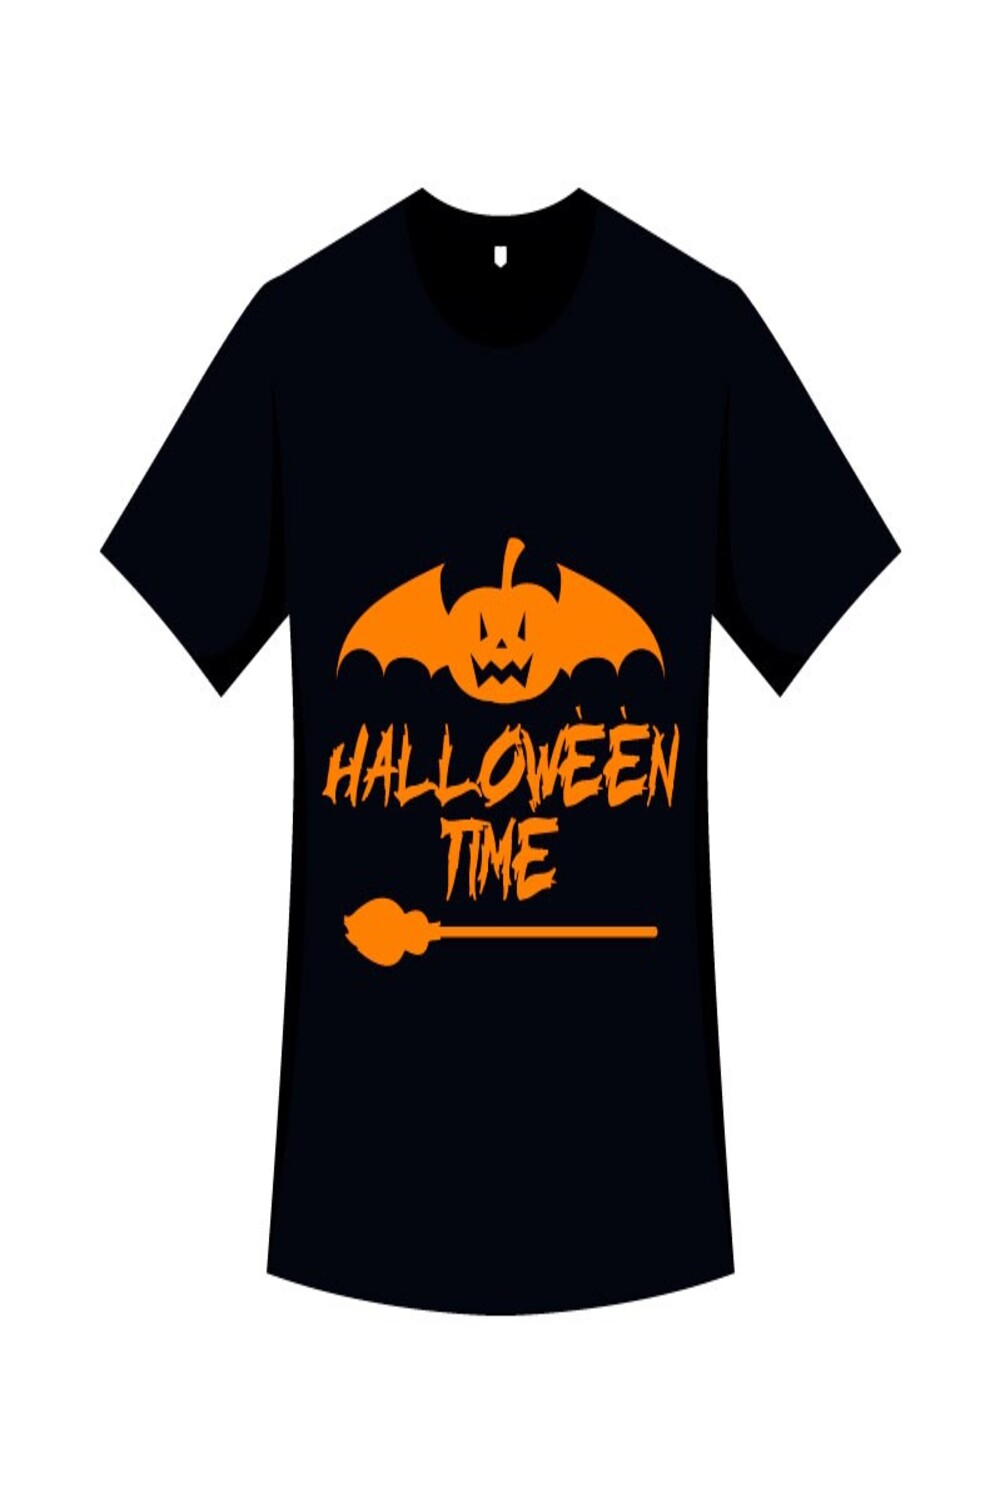 Black t-shirt with orange pumpkin with bat wings.